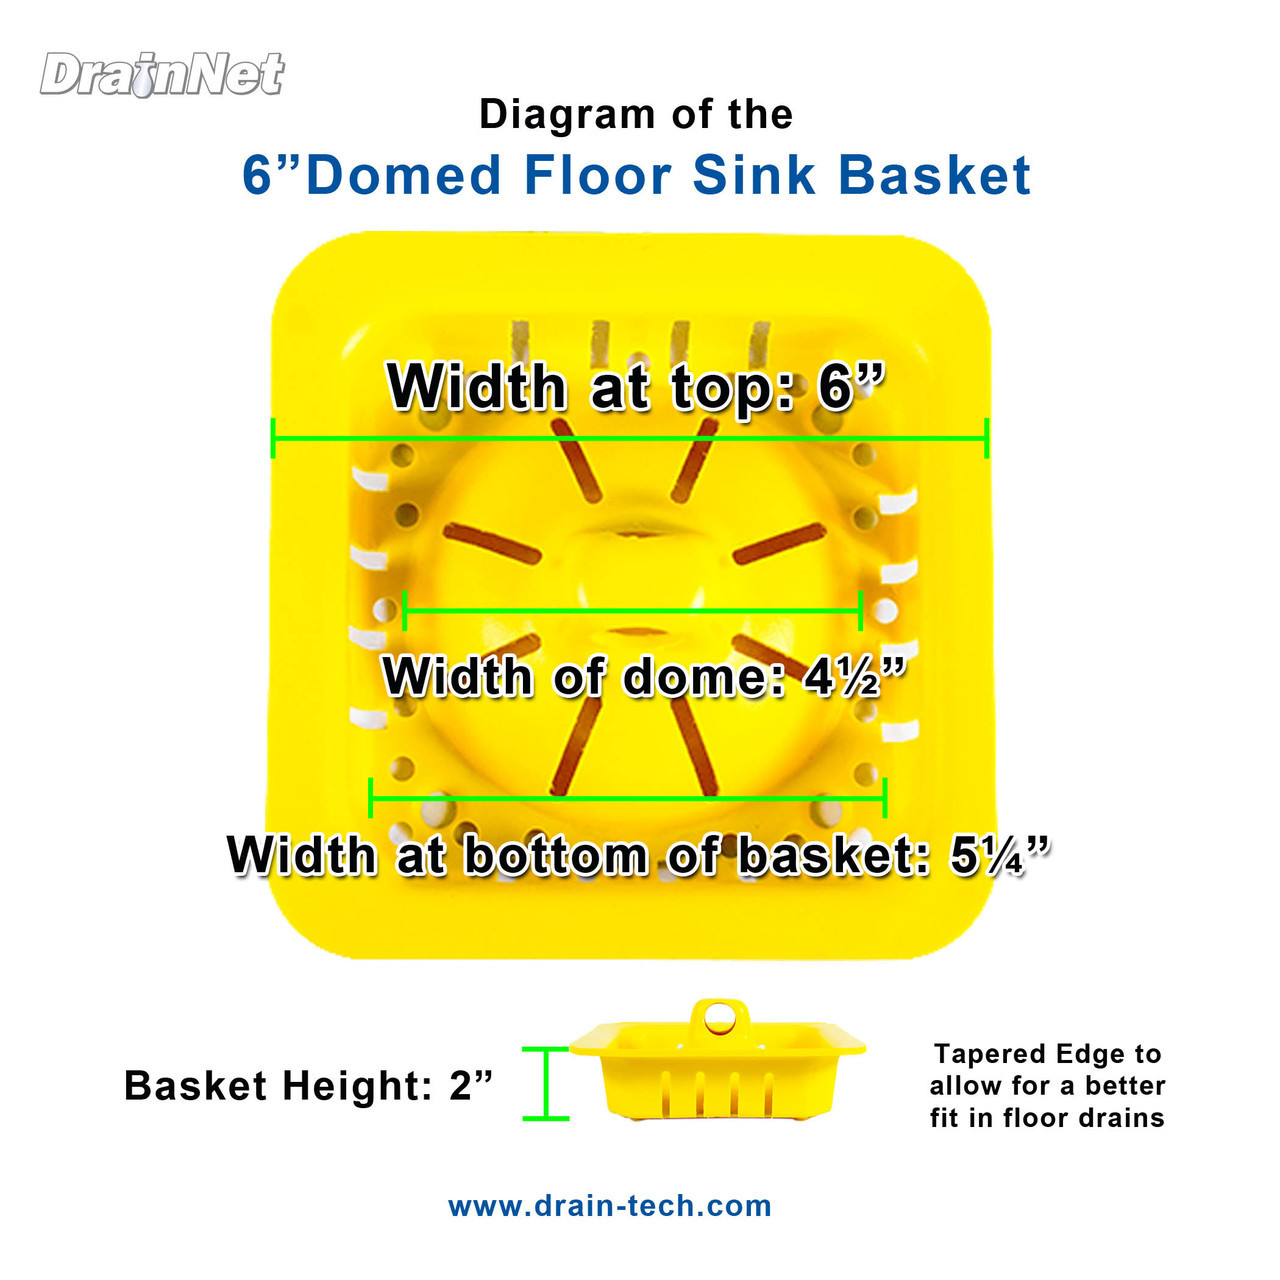 Fine Mesh Floor Sink Basket - 8.5 inch, 11 inch flange - Drain-Net